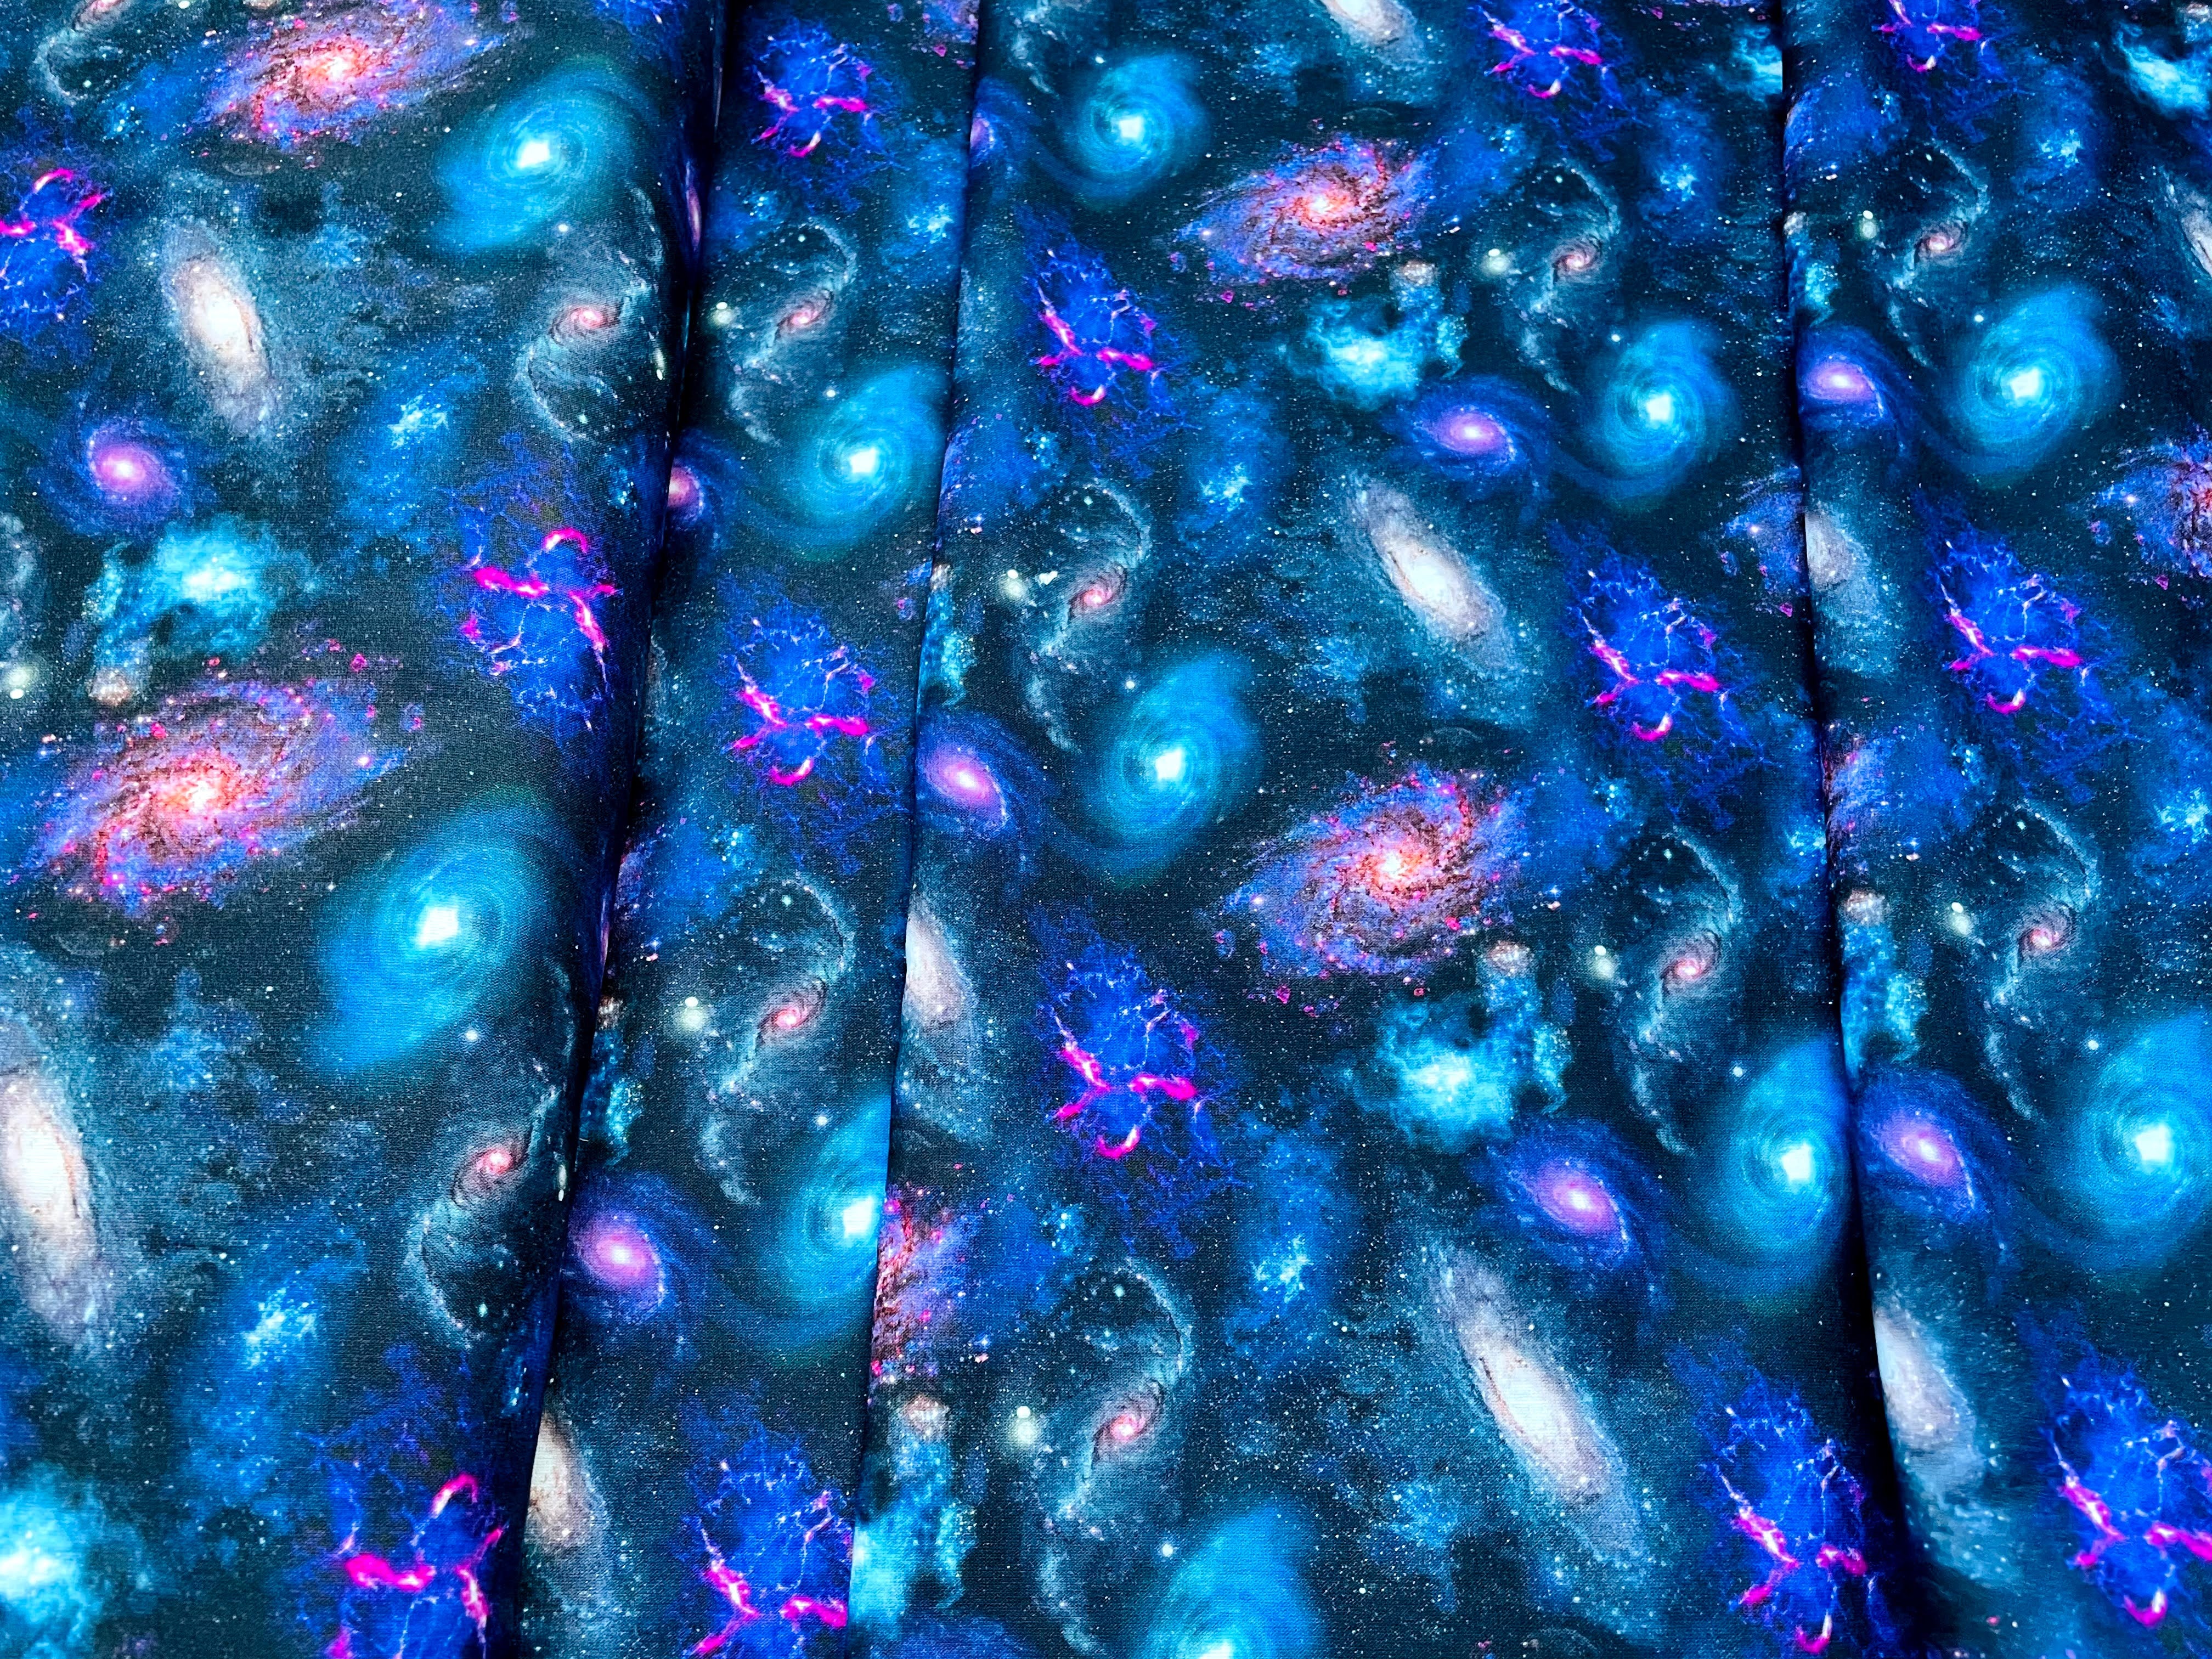 Universe Planets Space Galaxy Digital Print Fabric